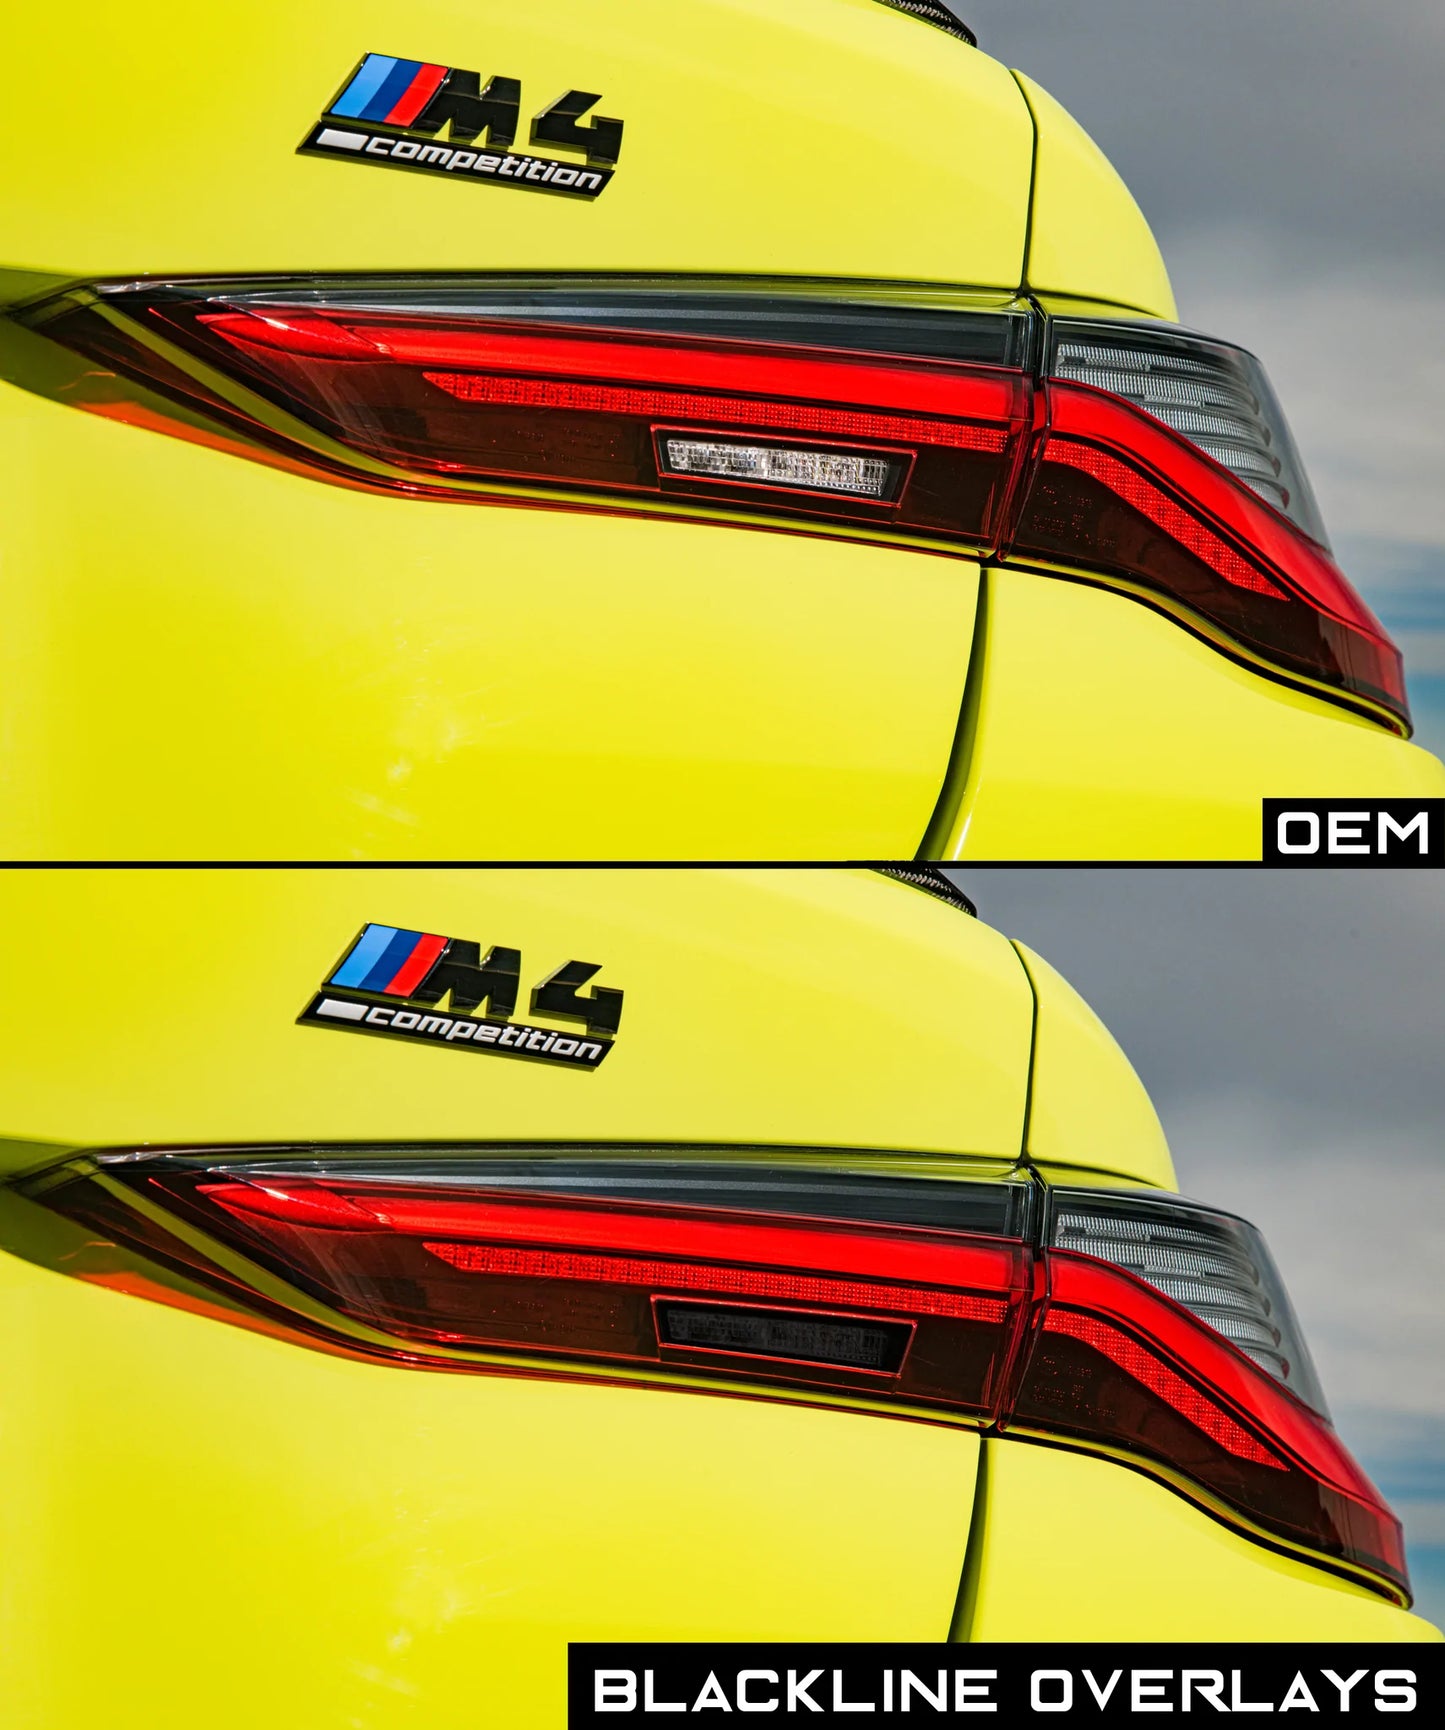 BMW 4 Series M4 Competition 2021+ (G22/G82 Pre LCI) BLACKLINE Tail Light Overlay Kit